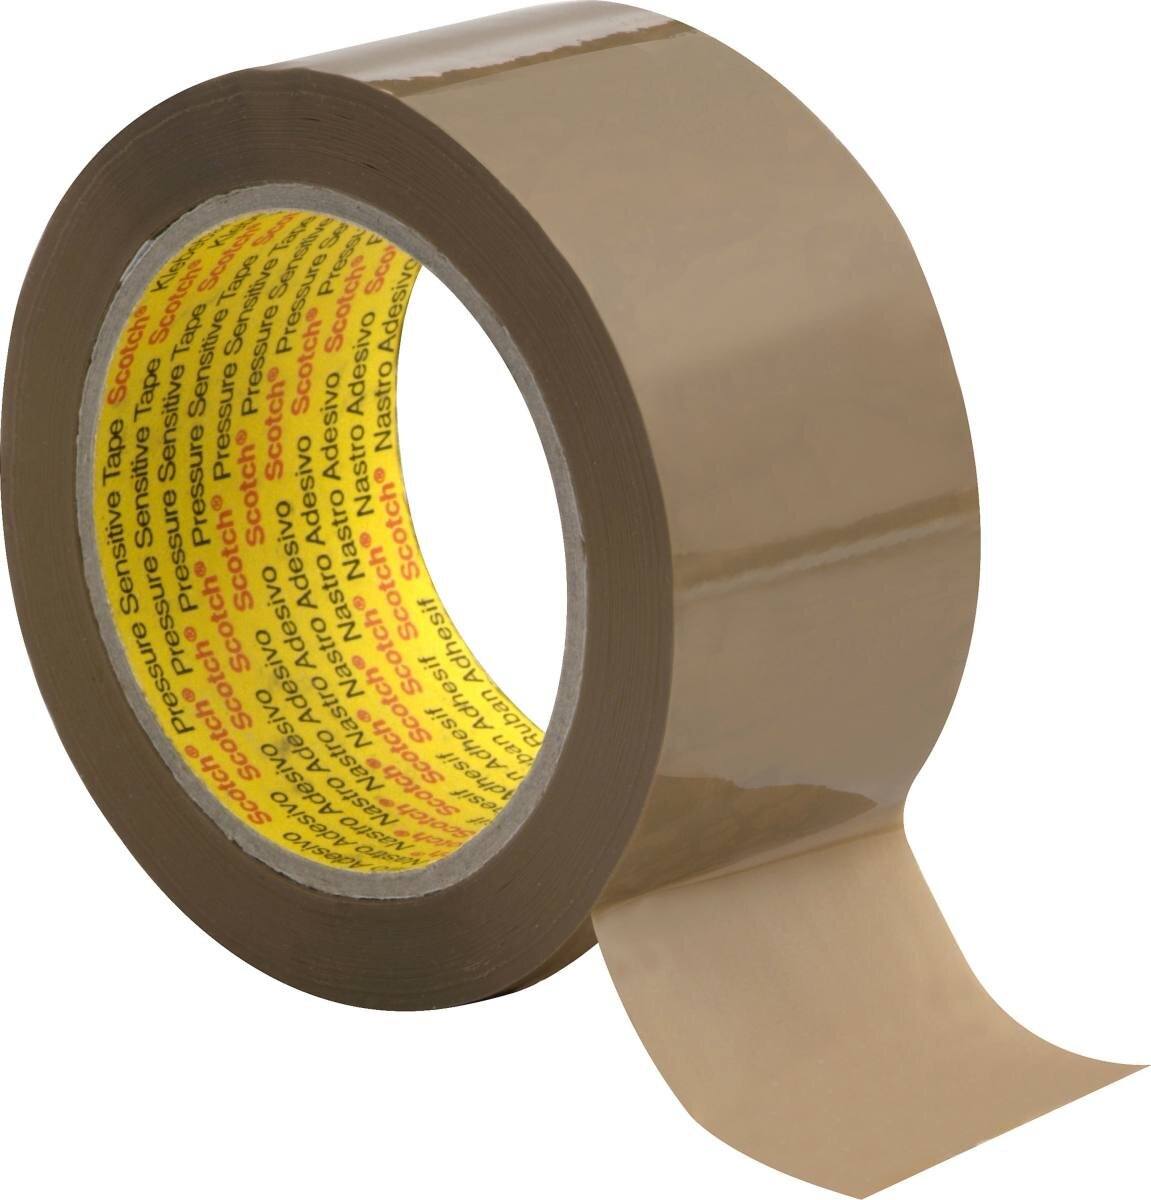 3M Scotch packaging tape 3739, brown, 75 mm x 66 m, 0.056 mm